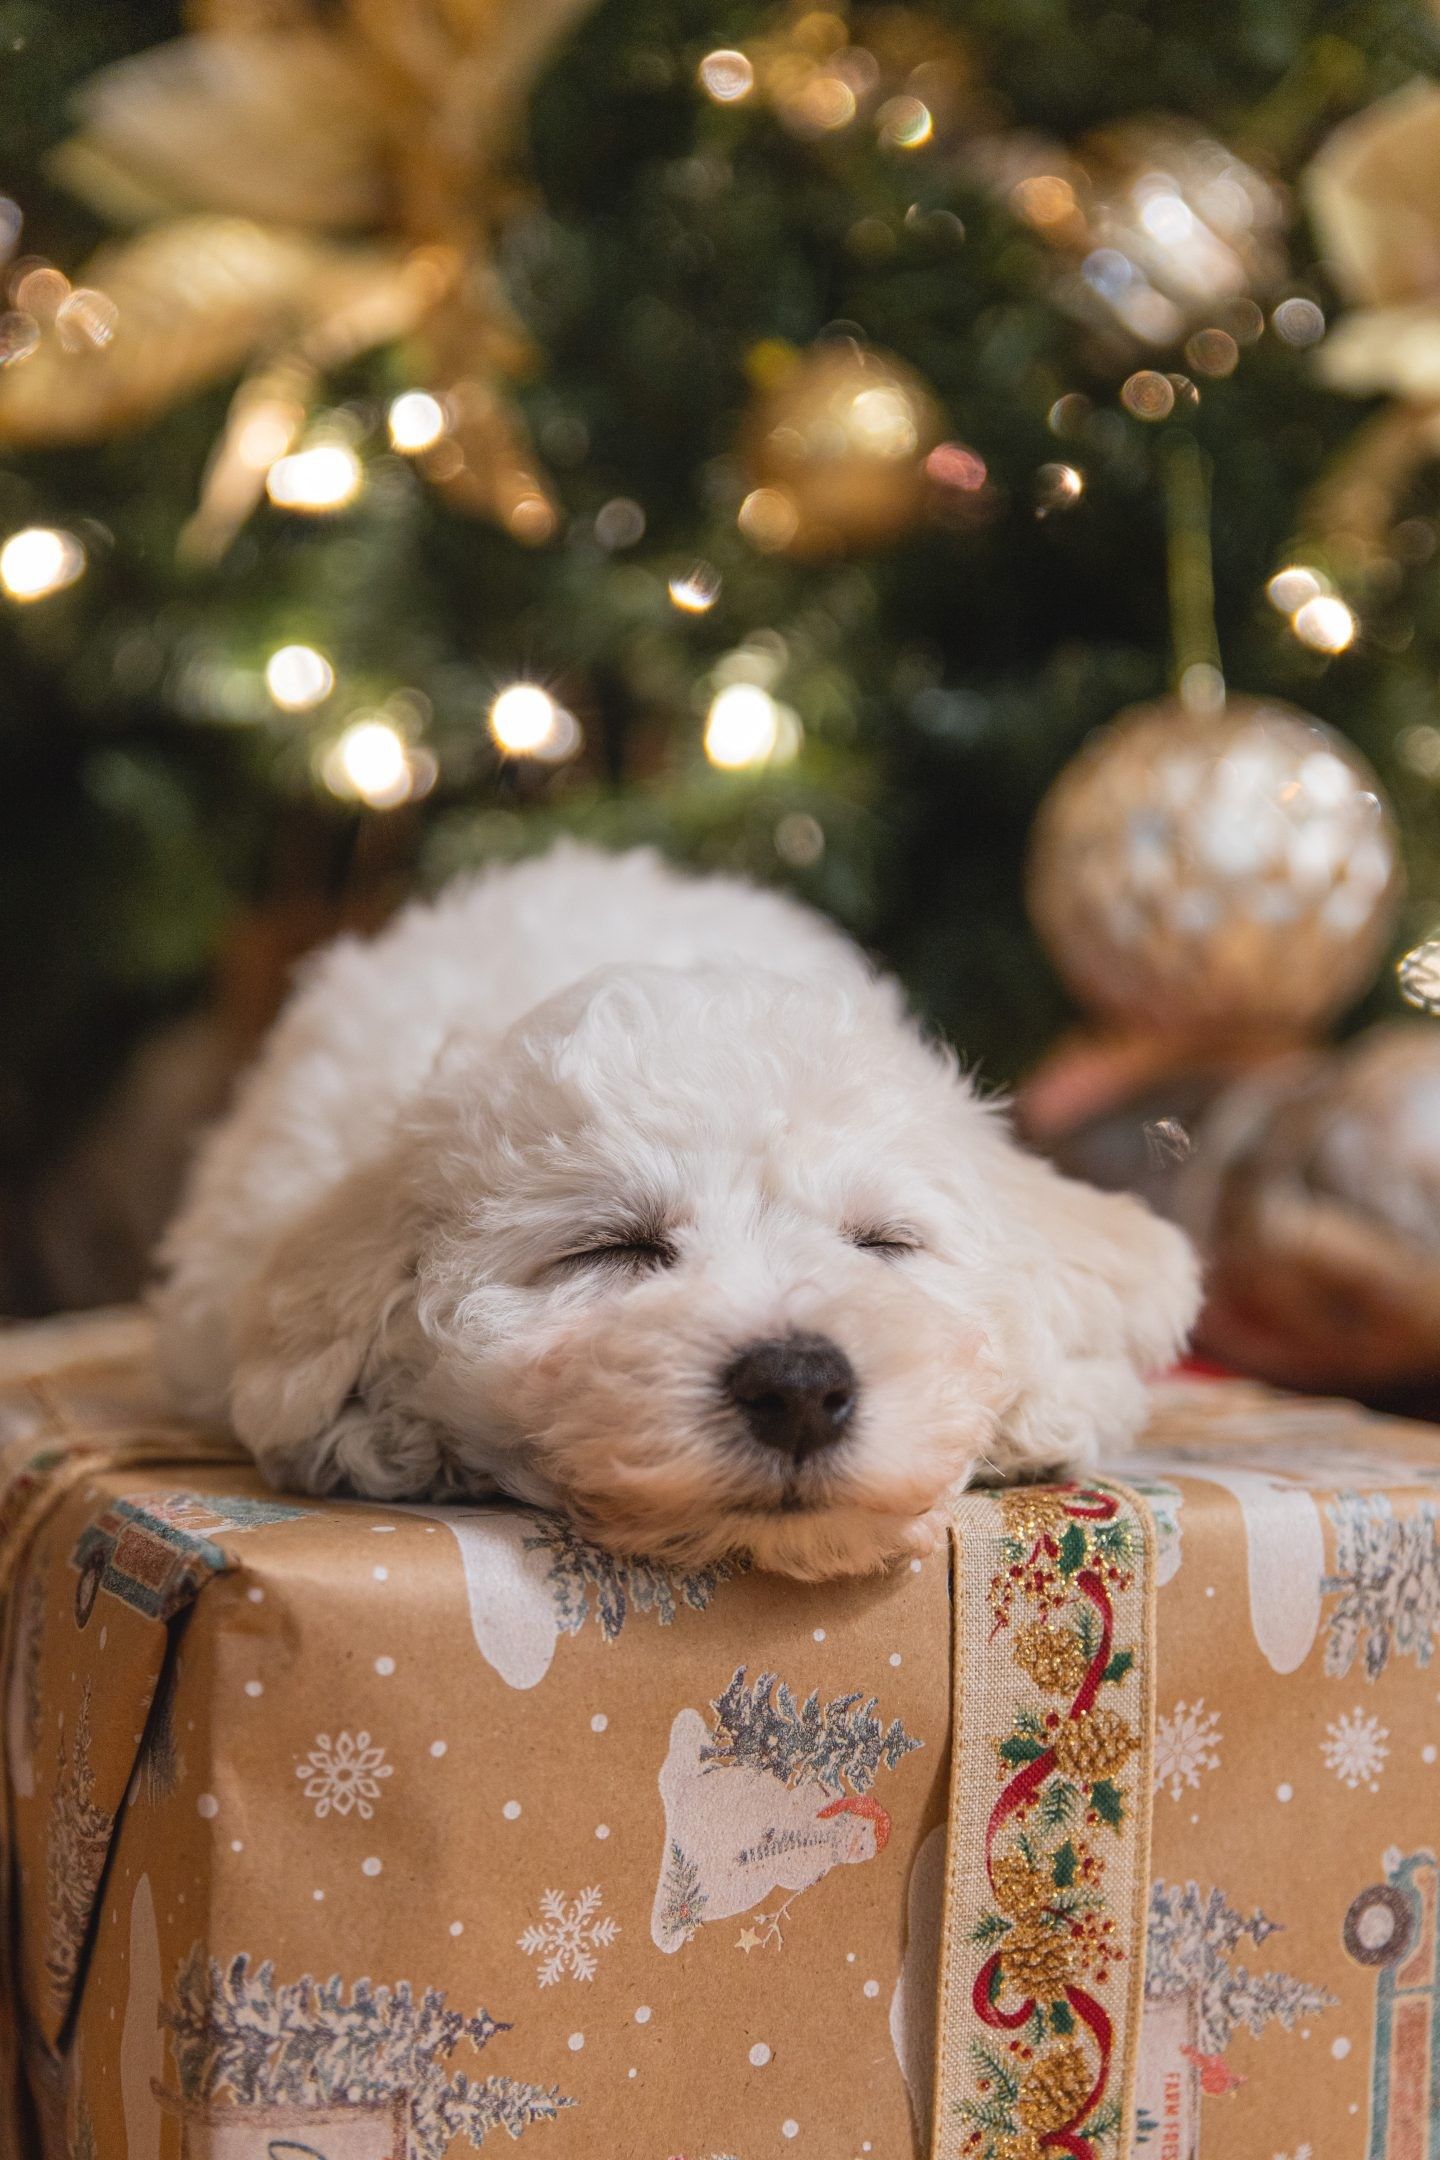 A small dog sleeping on top of gift box - Cute Christmas